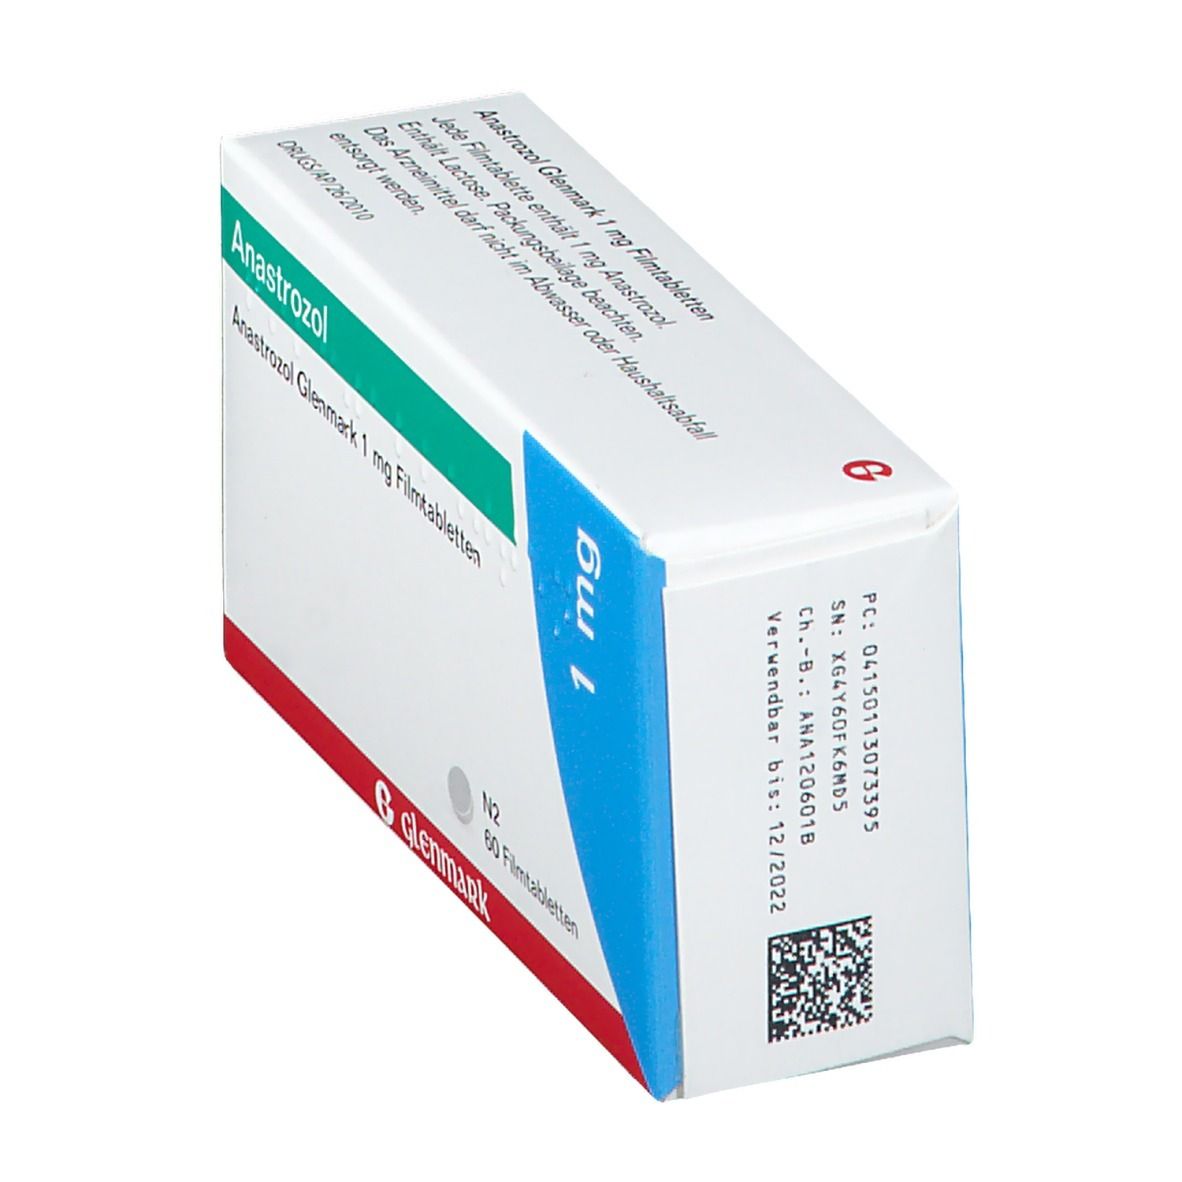 Anastrozol Glenmark 1 mg